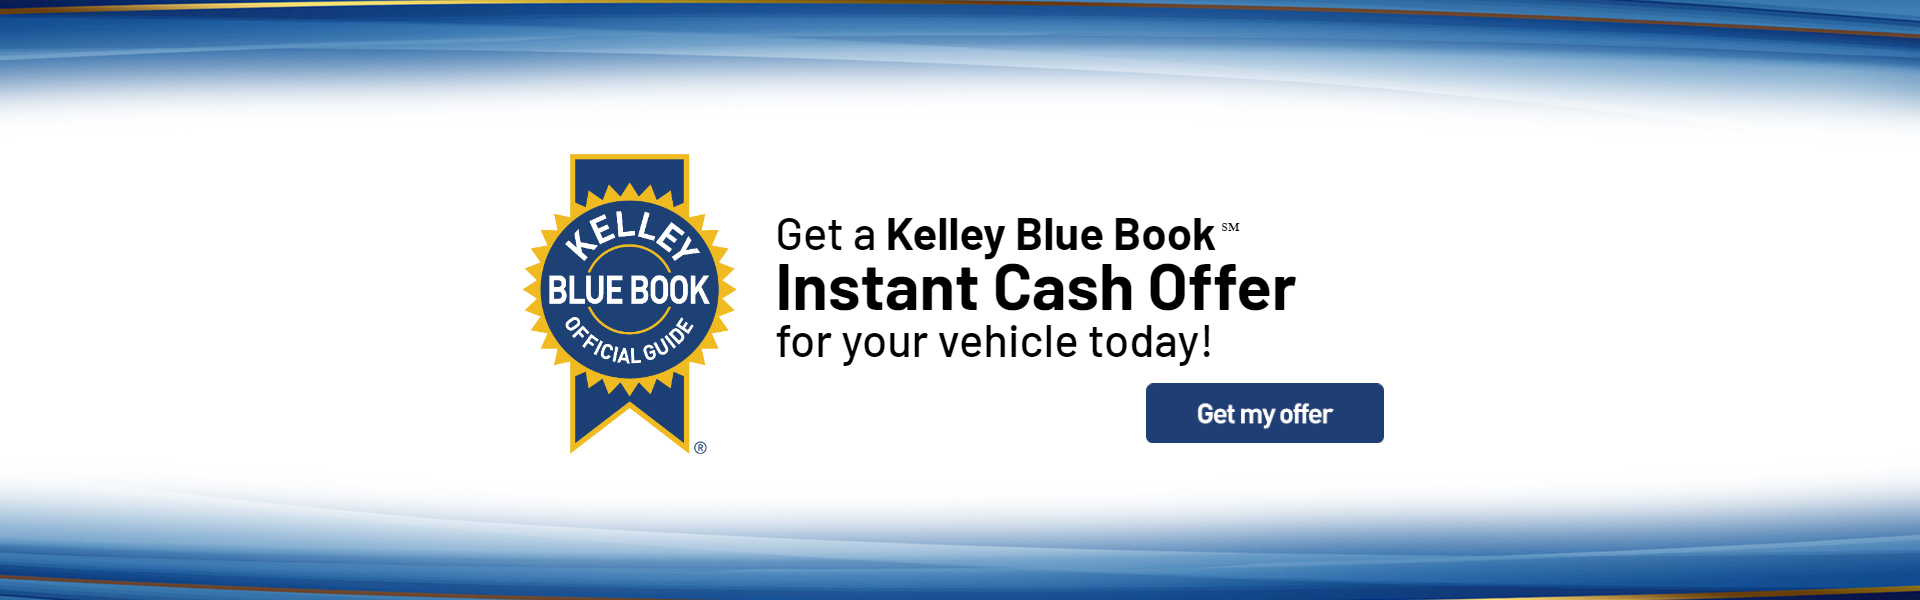 Kelly Blue Book Instant Cash offer